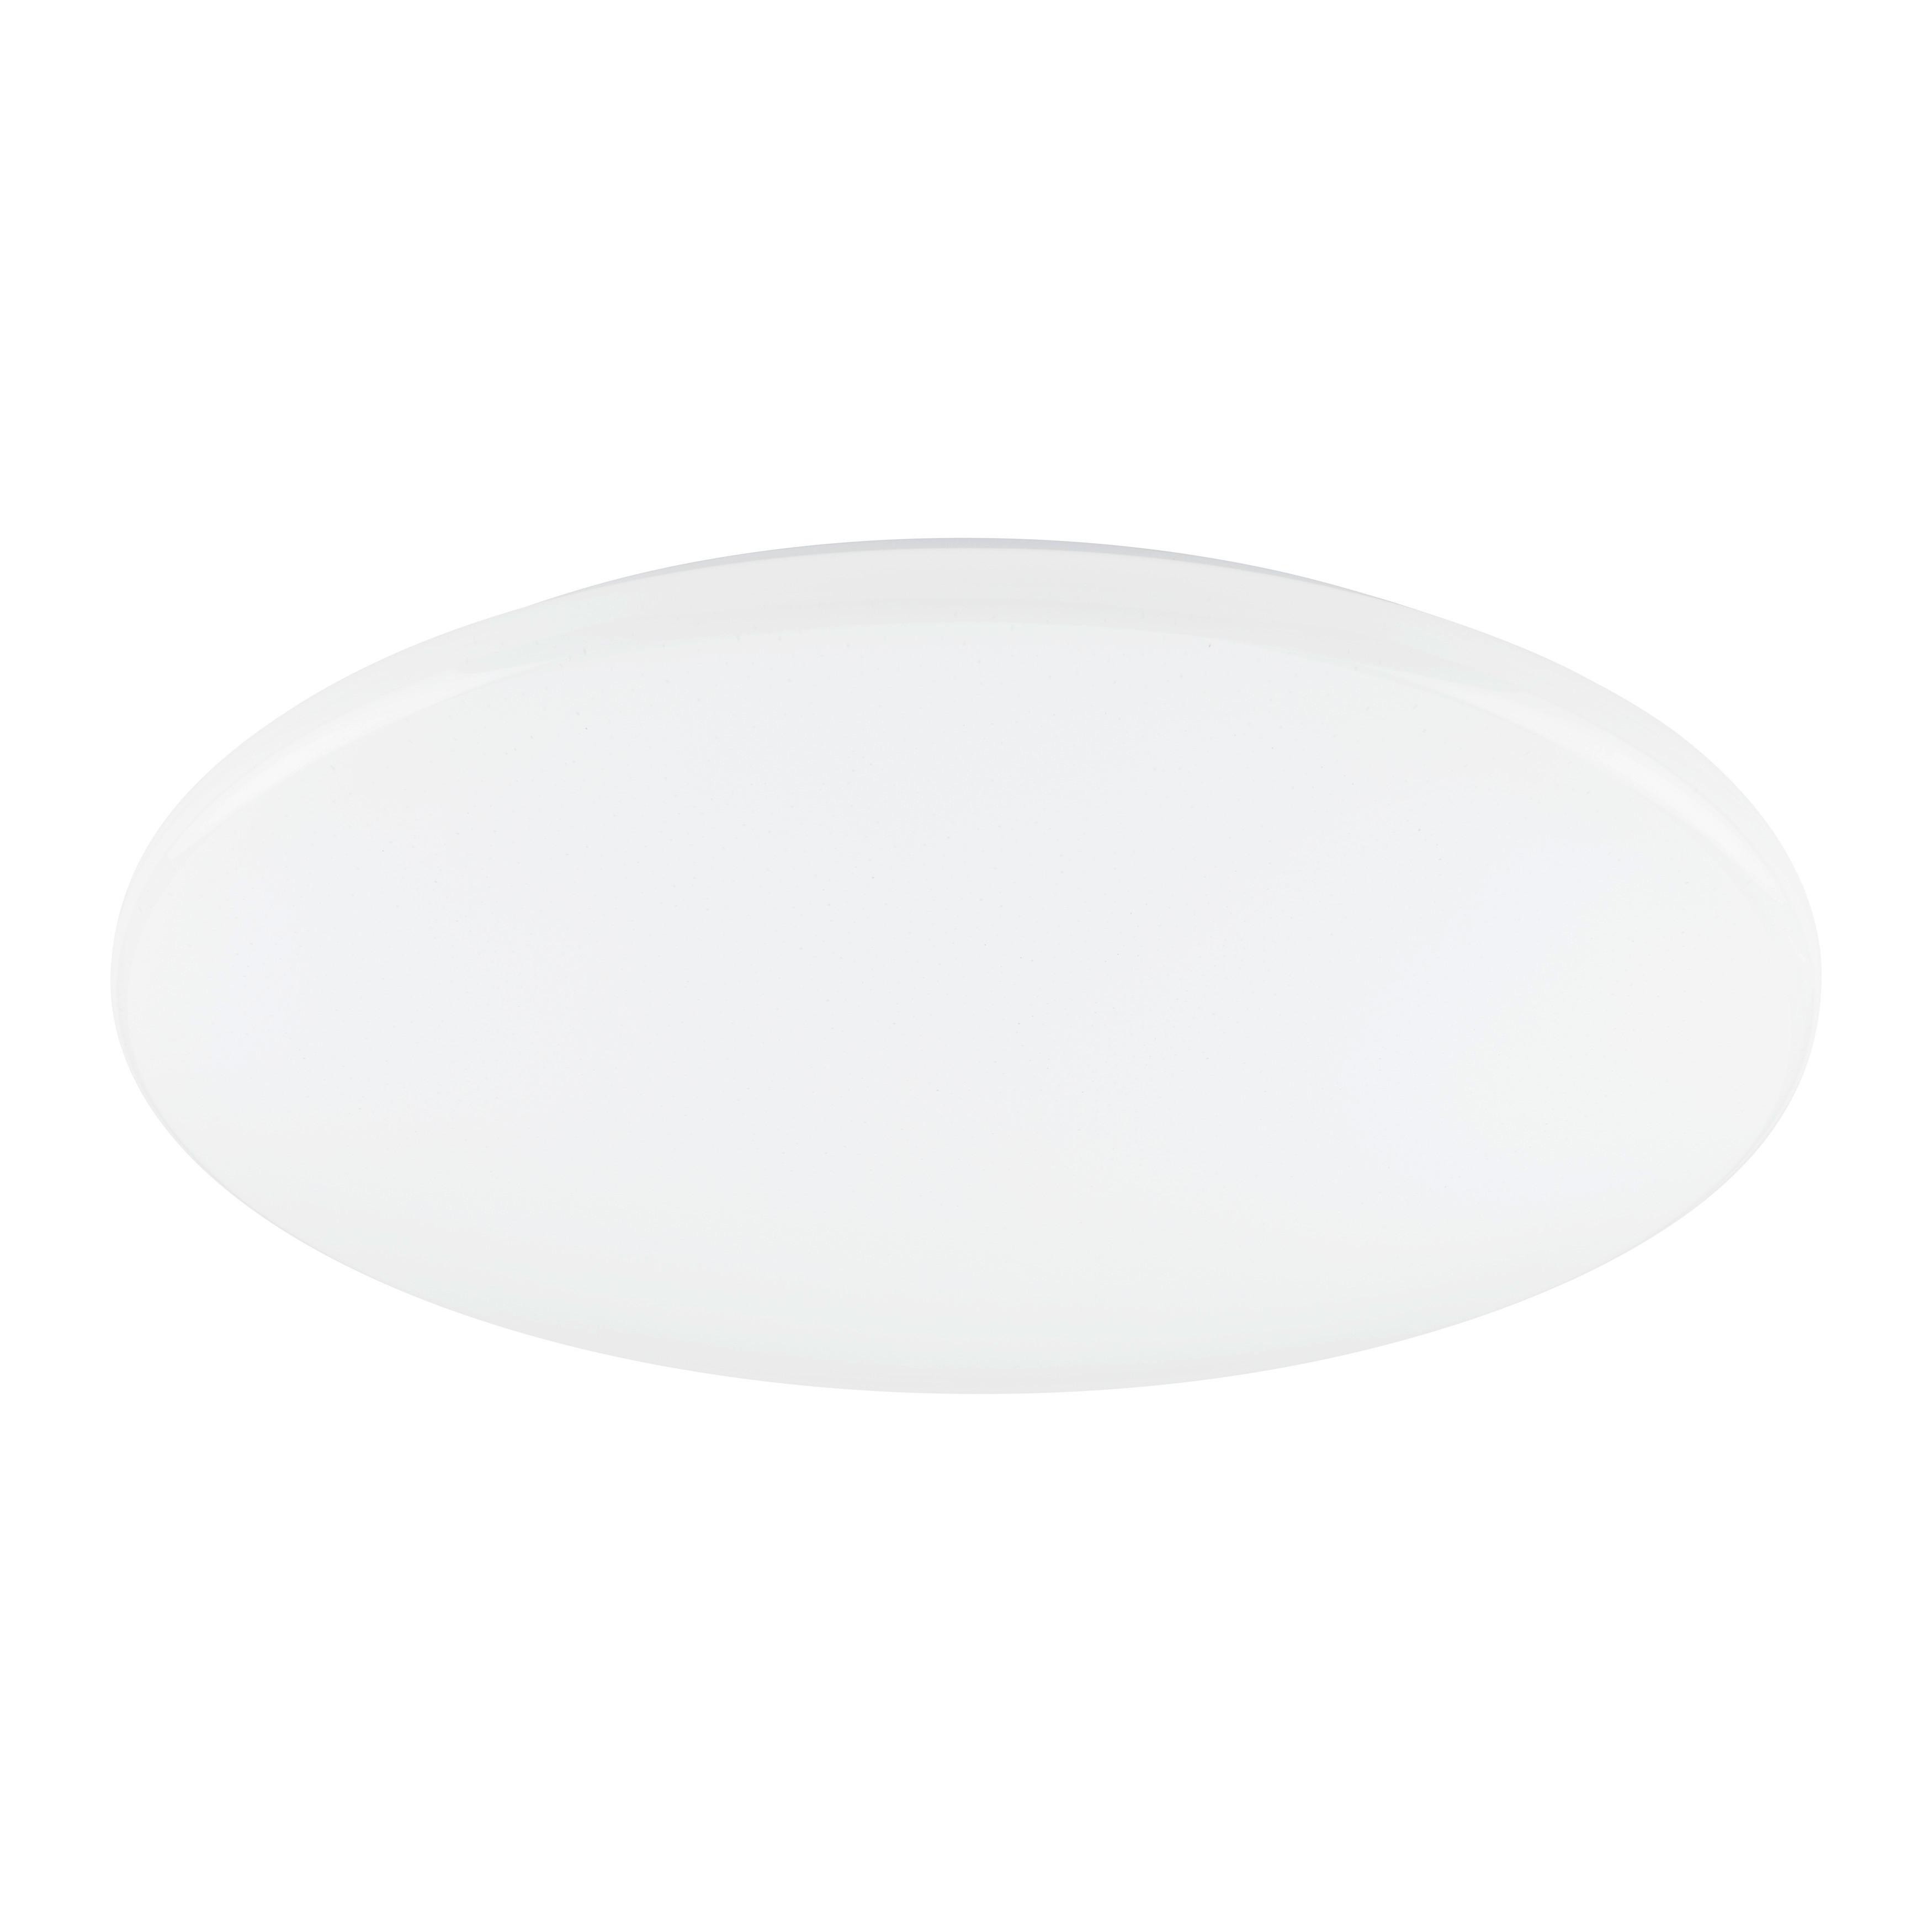 Plafonieră Bezzi - alb, Konventionell, plastic/metal (76/12cm) - Premium Living